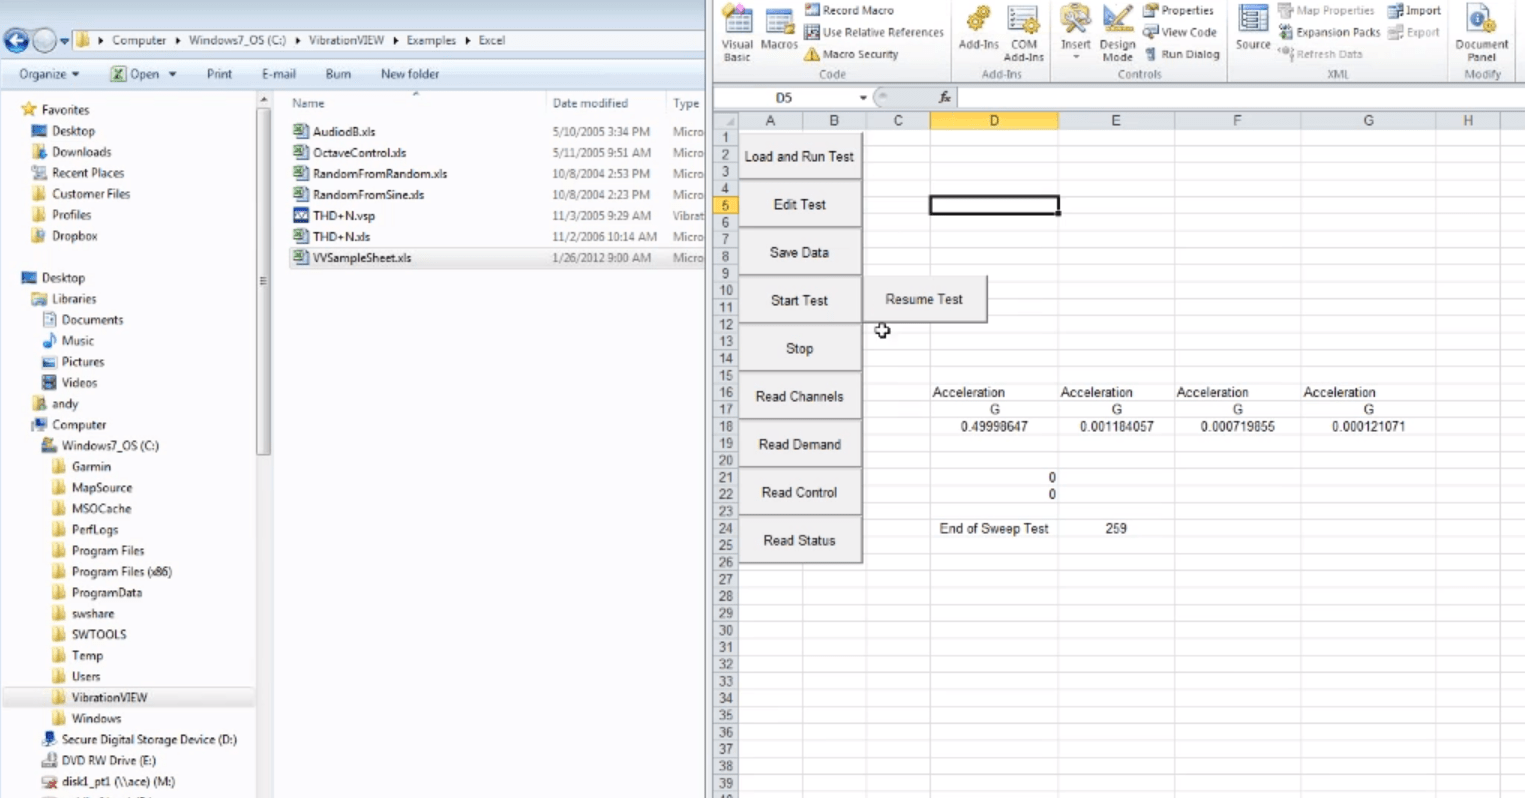 ActiveX functionality in Excel